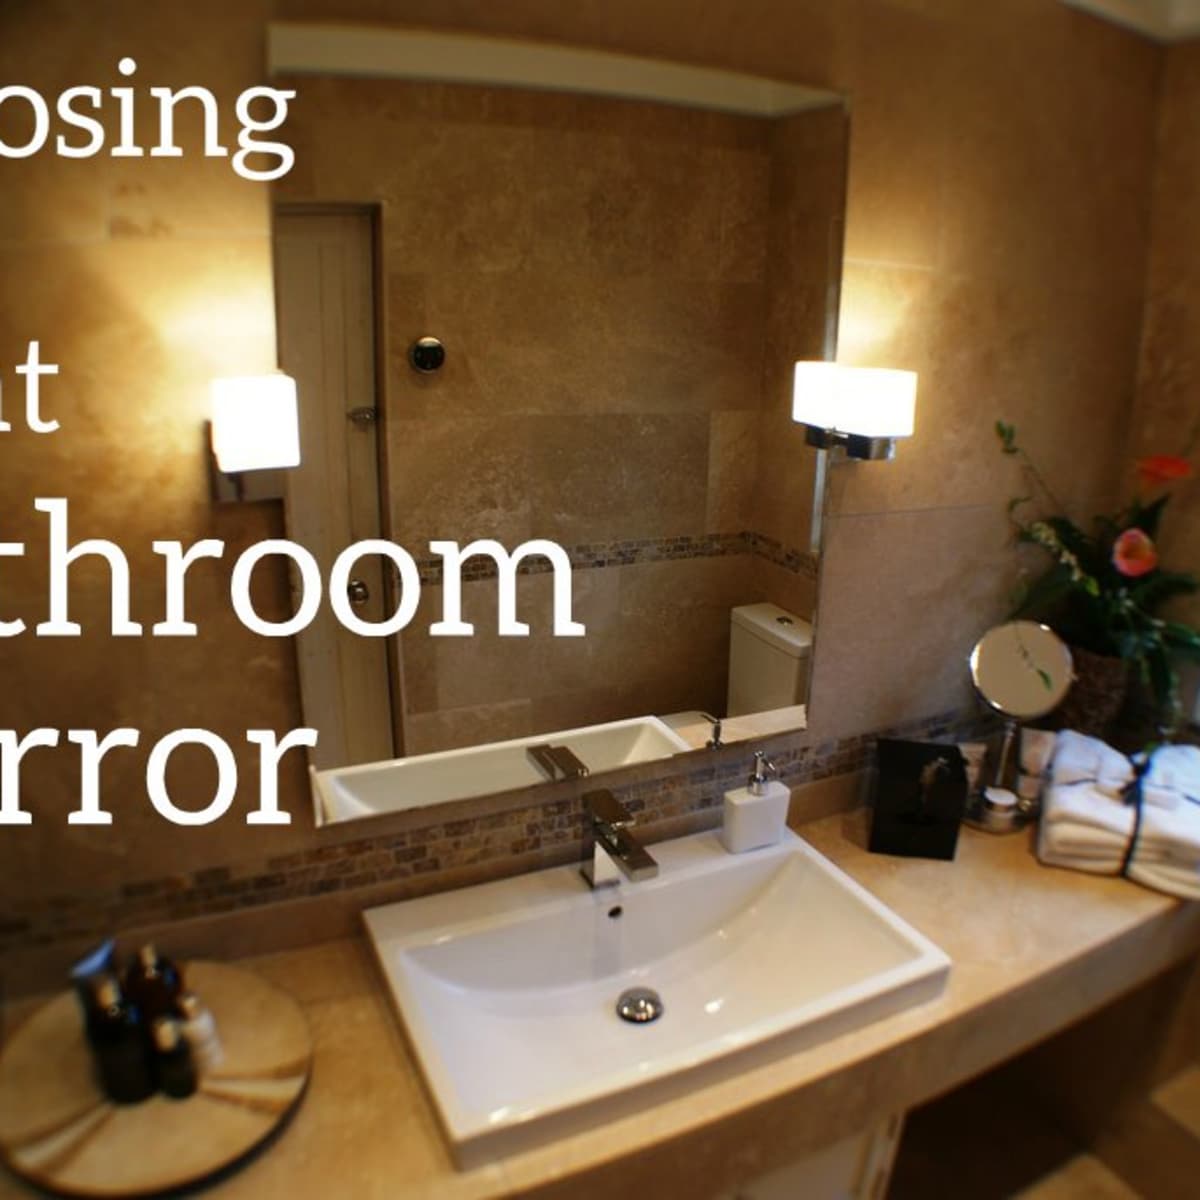 Mirror Above Your Bathroom Vanity, How Wide Should My Vanity Mirror Be